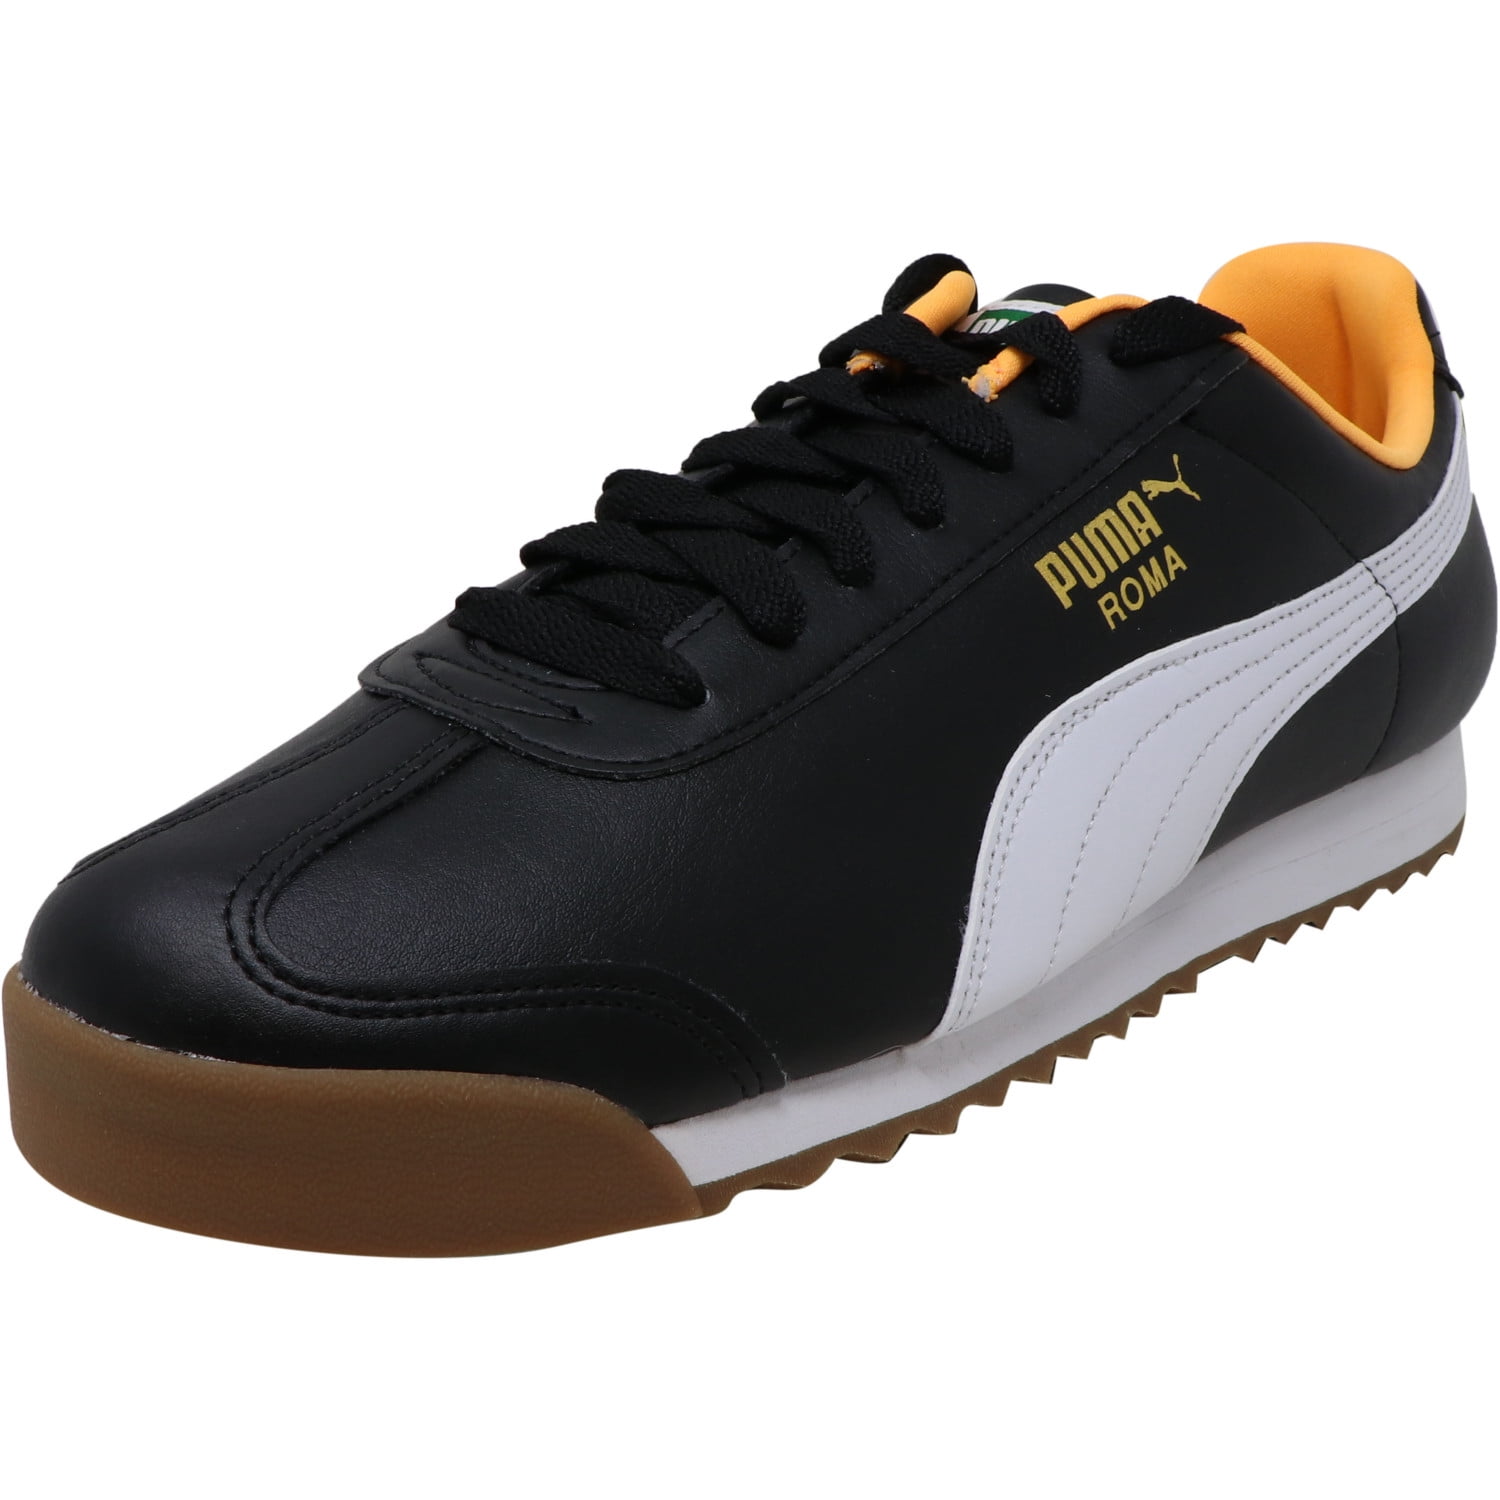 Puma Men's Roma Basic Black / Orange Pop Ankle-High Sneaker - 12M ...